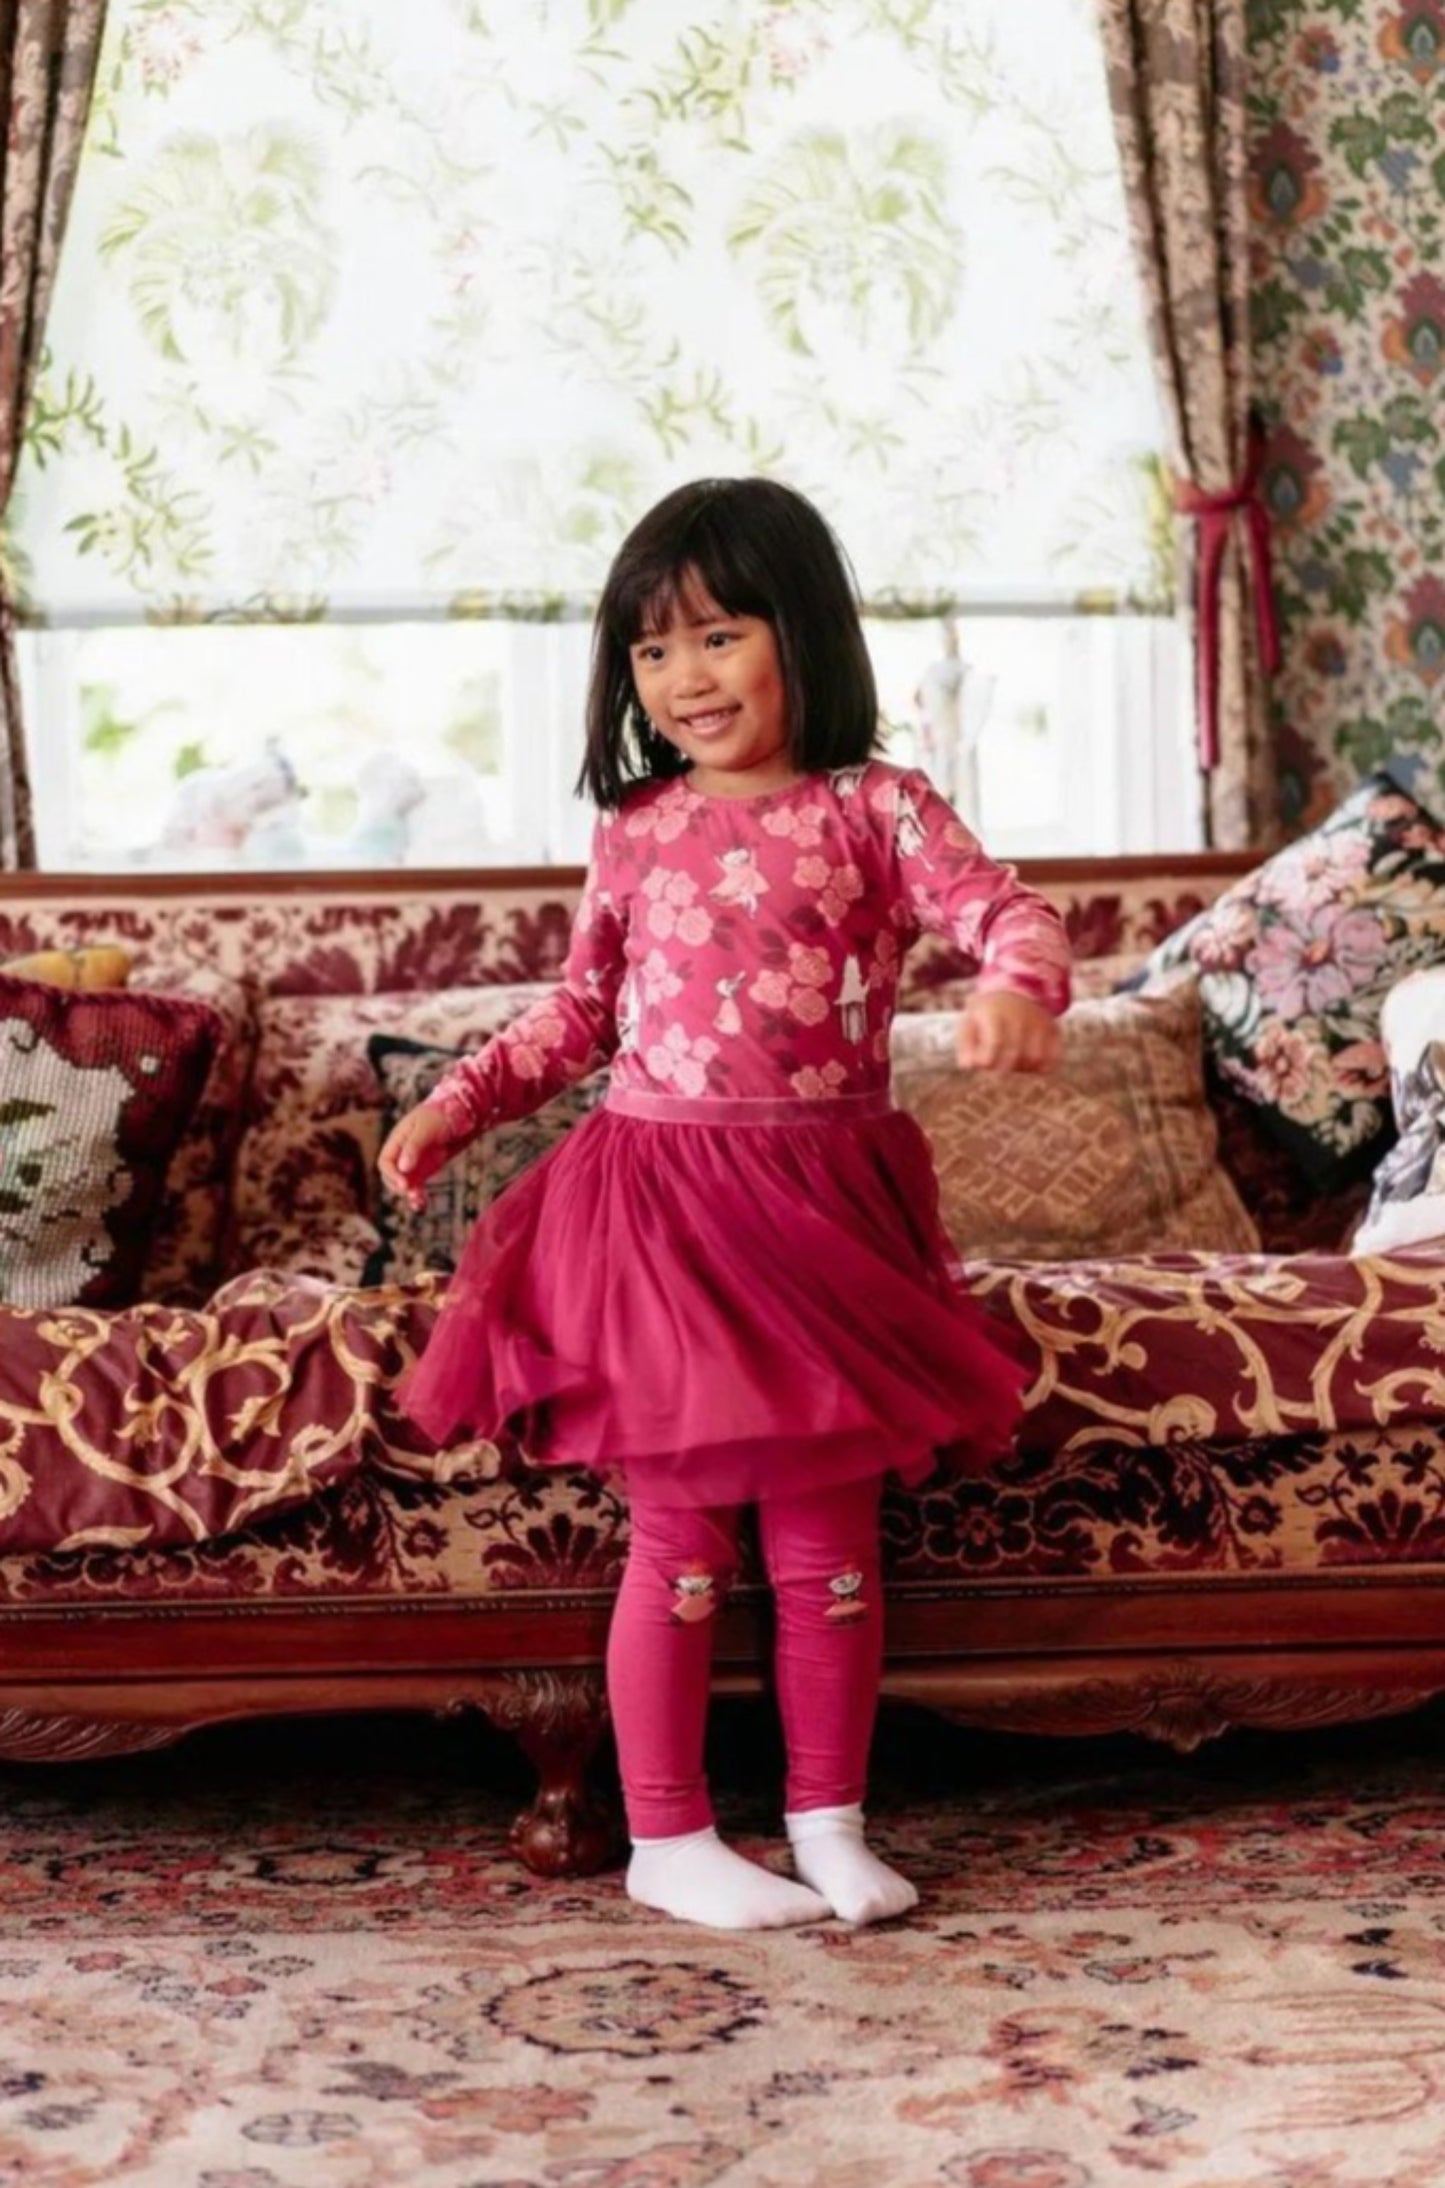 Moomin Kids Tulle Dress, Inspiration (8909307478303)